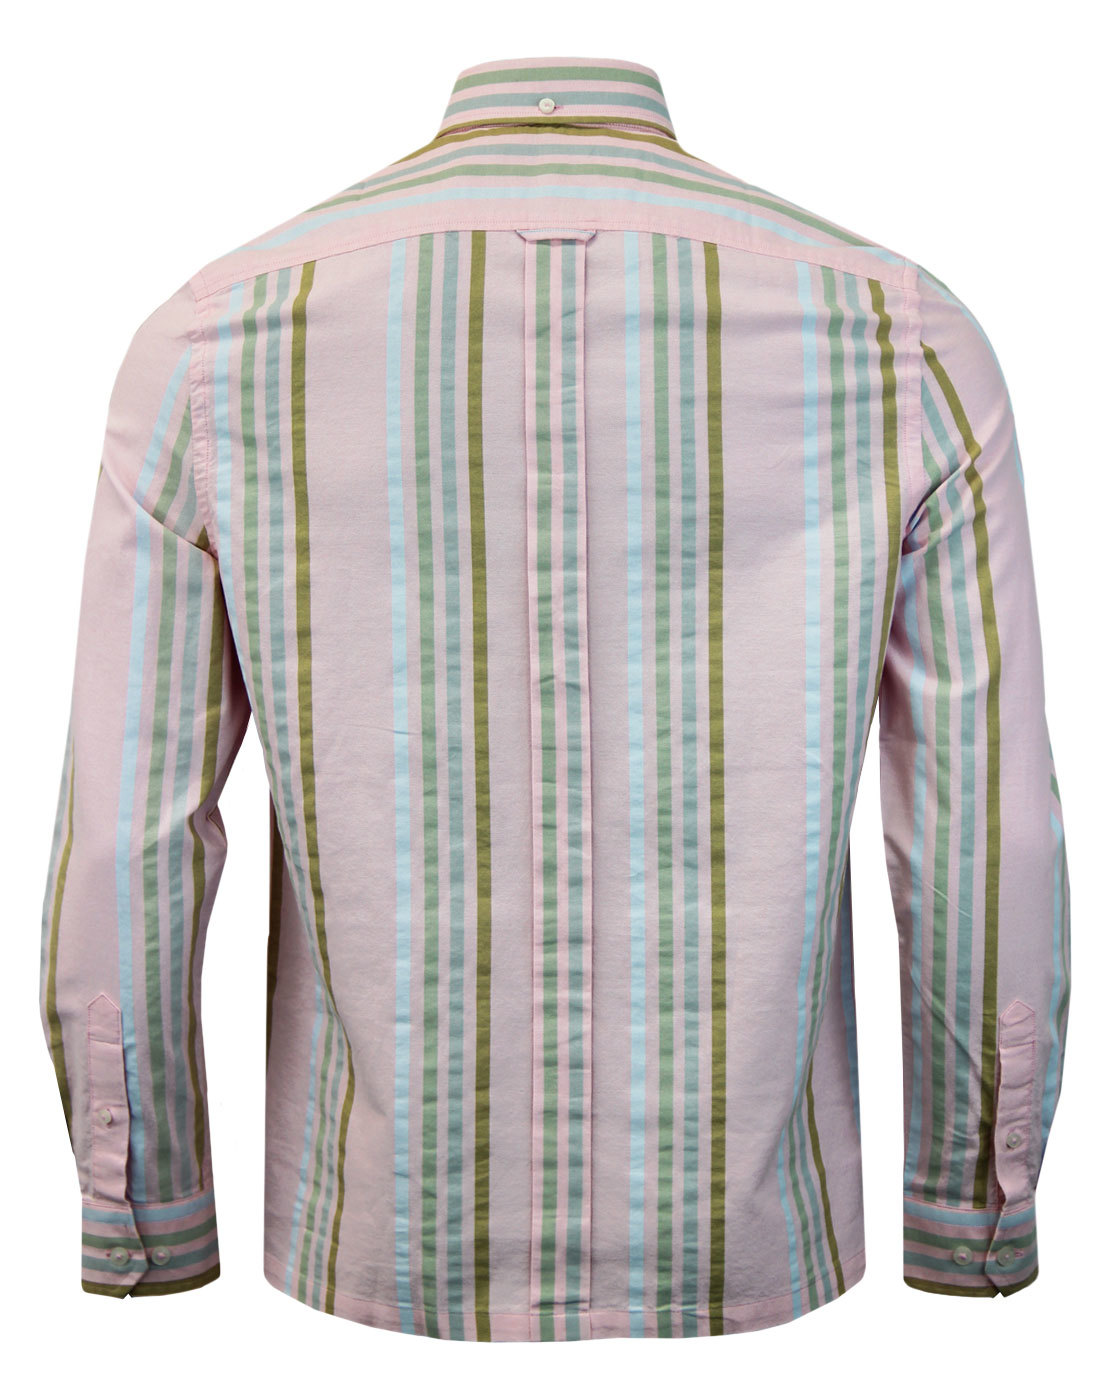 BEN SHERMAN Mens 60s Mod Archive Print Candy Stripe Shirt in Pink